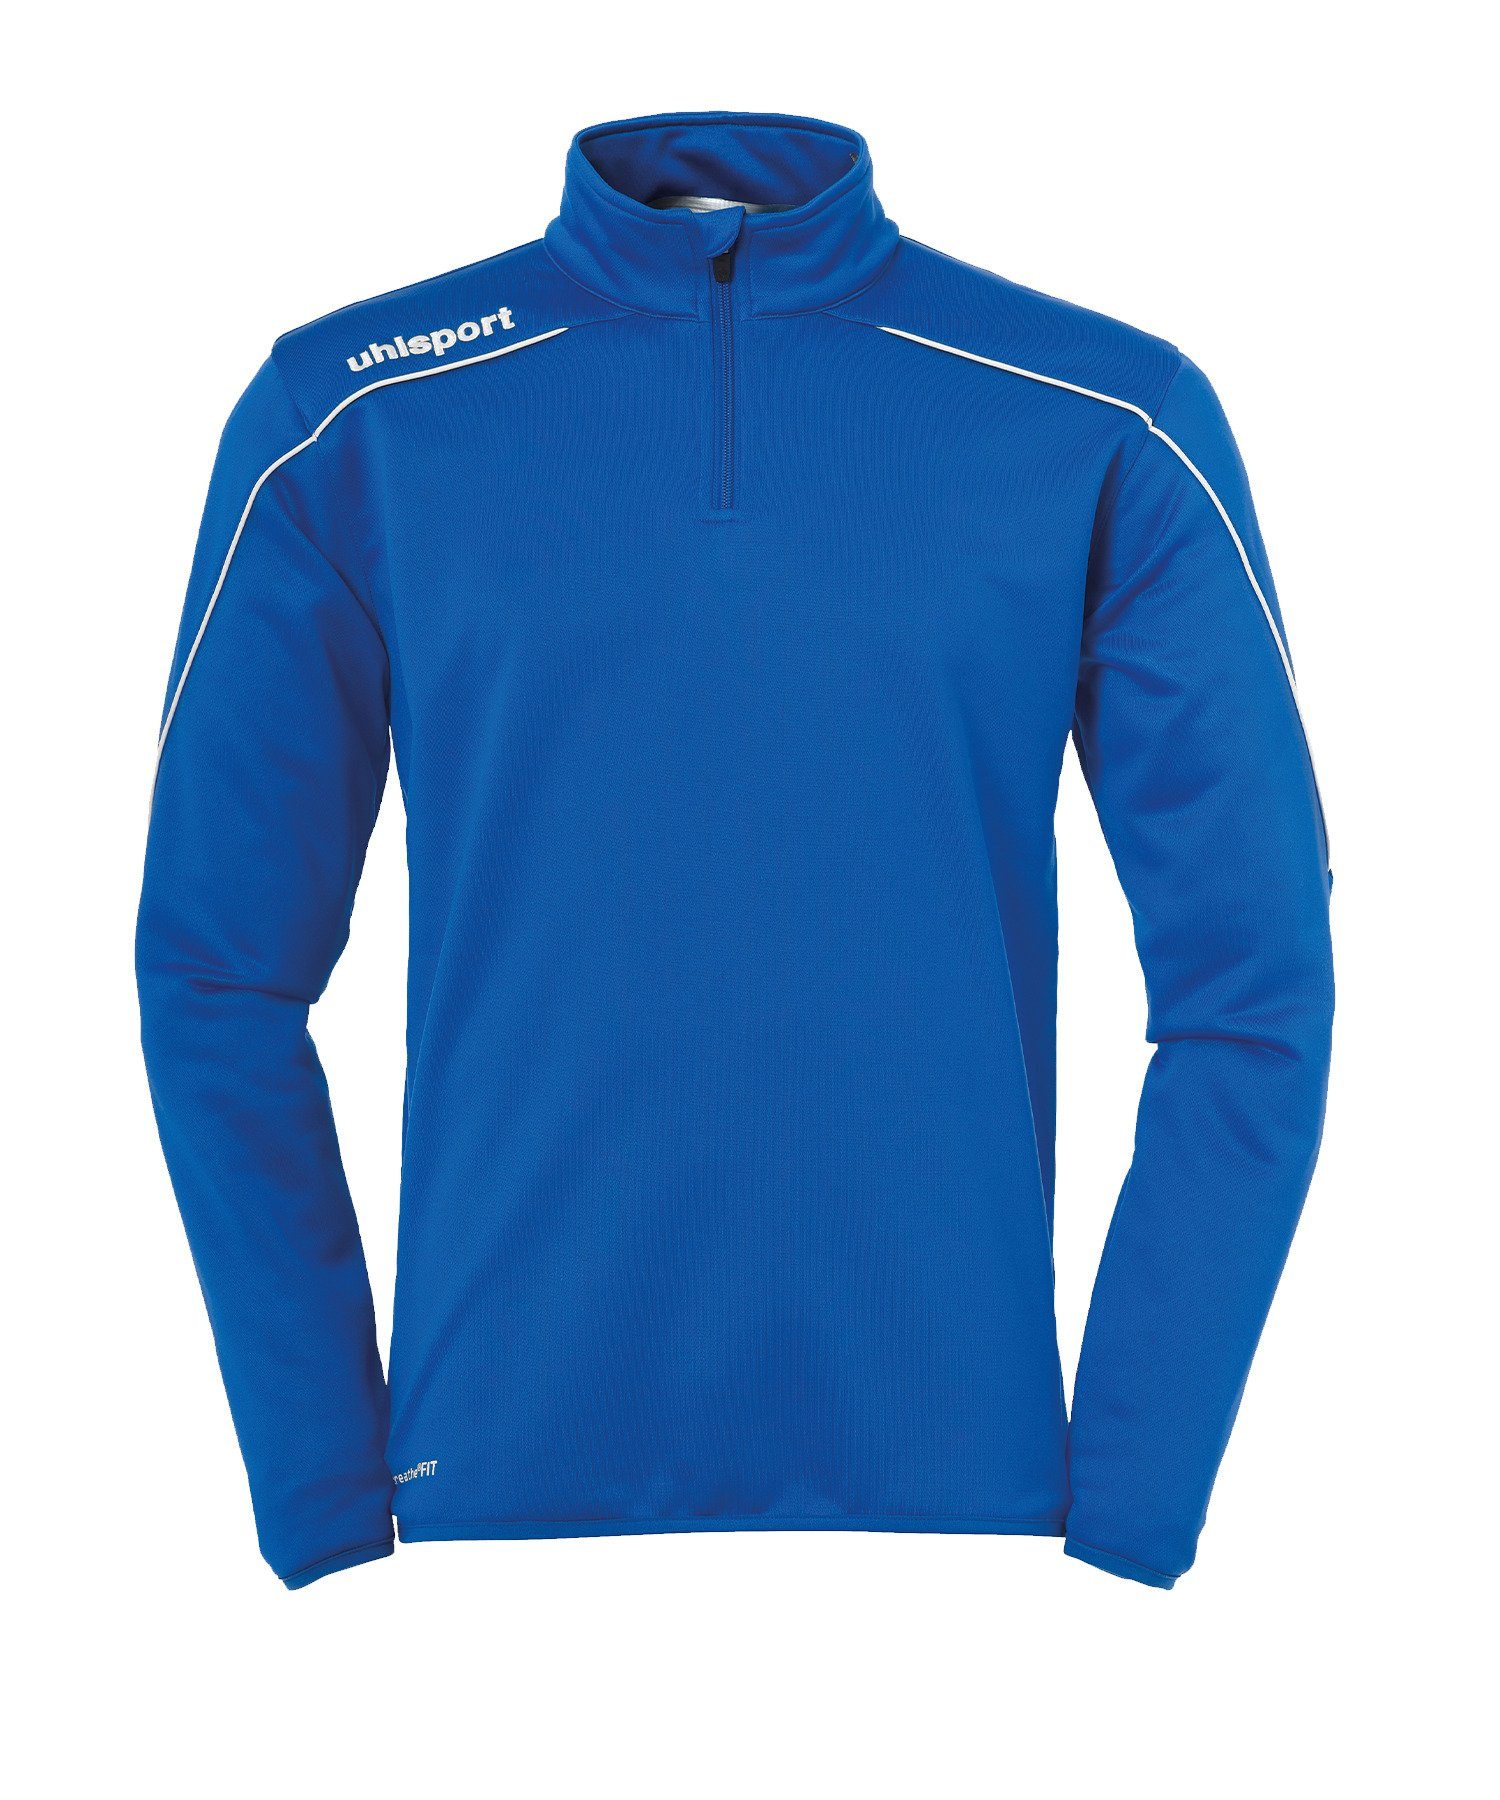 uhlsport Sweatshirt Stream 22 Ziptop BlauWeiss | Sweatshirts